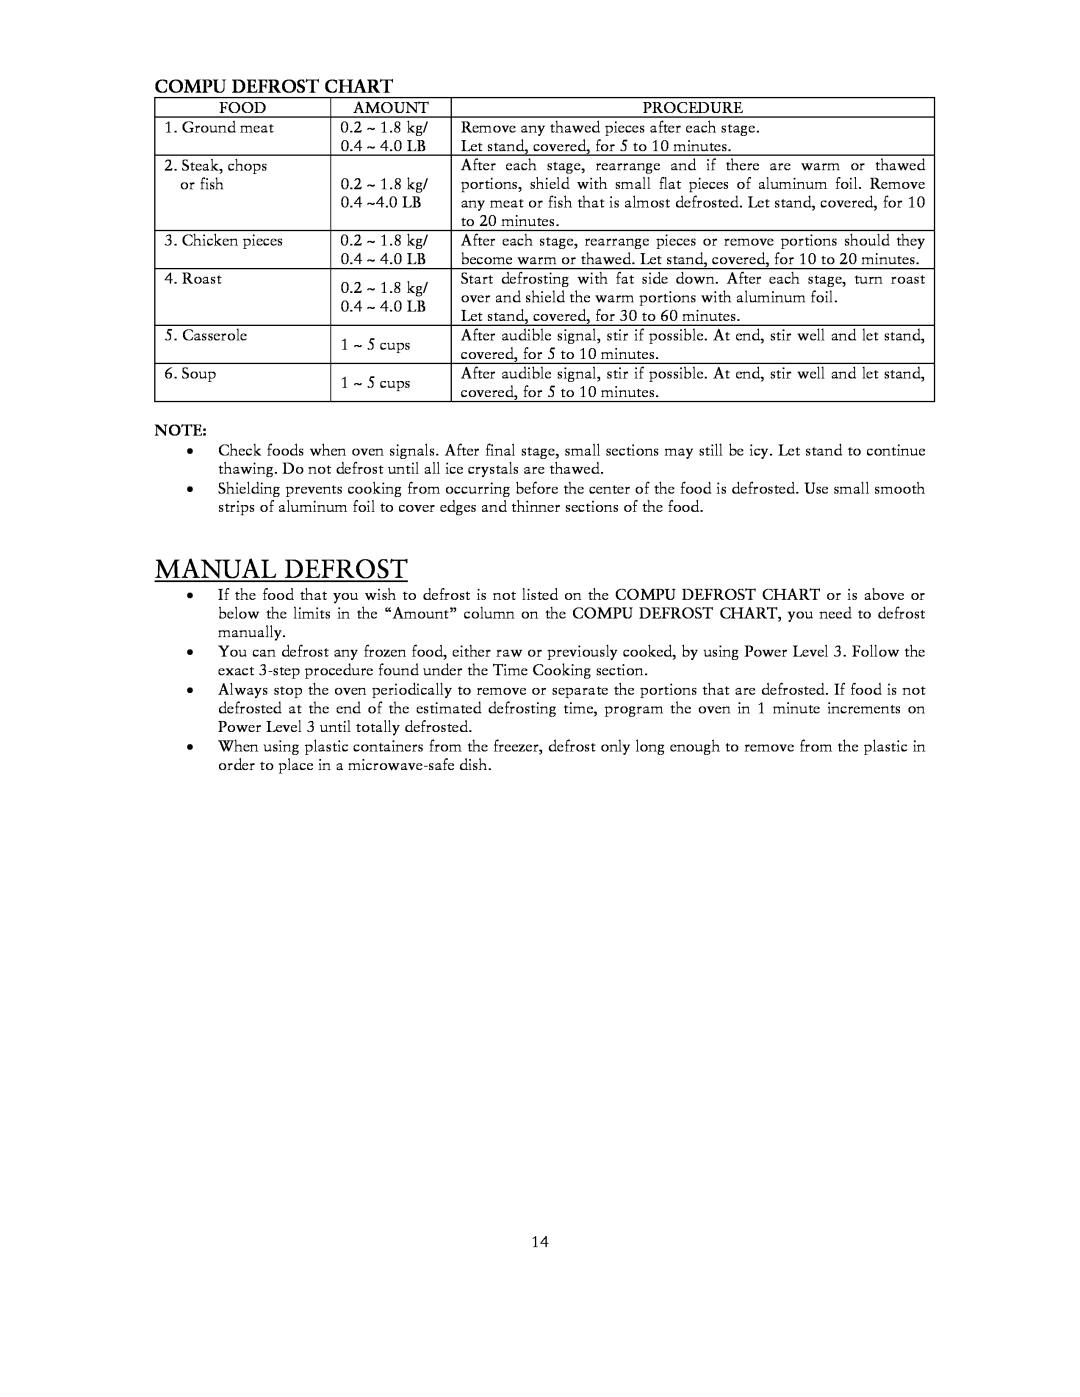 Sunbeam SNM1501RAX user manual Manual Defrost, Compu Defrost Chart 